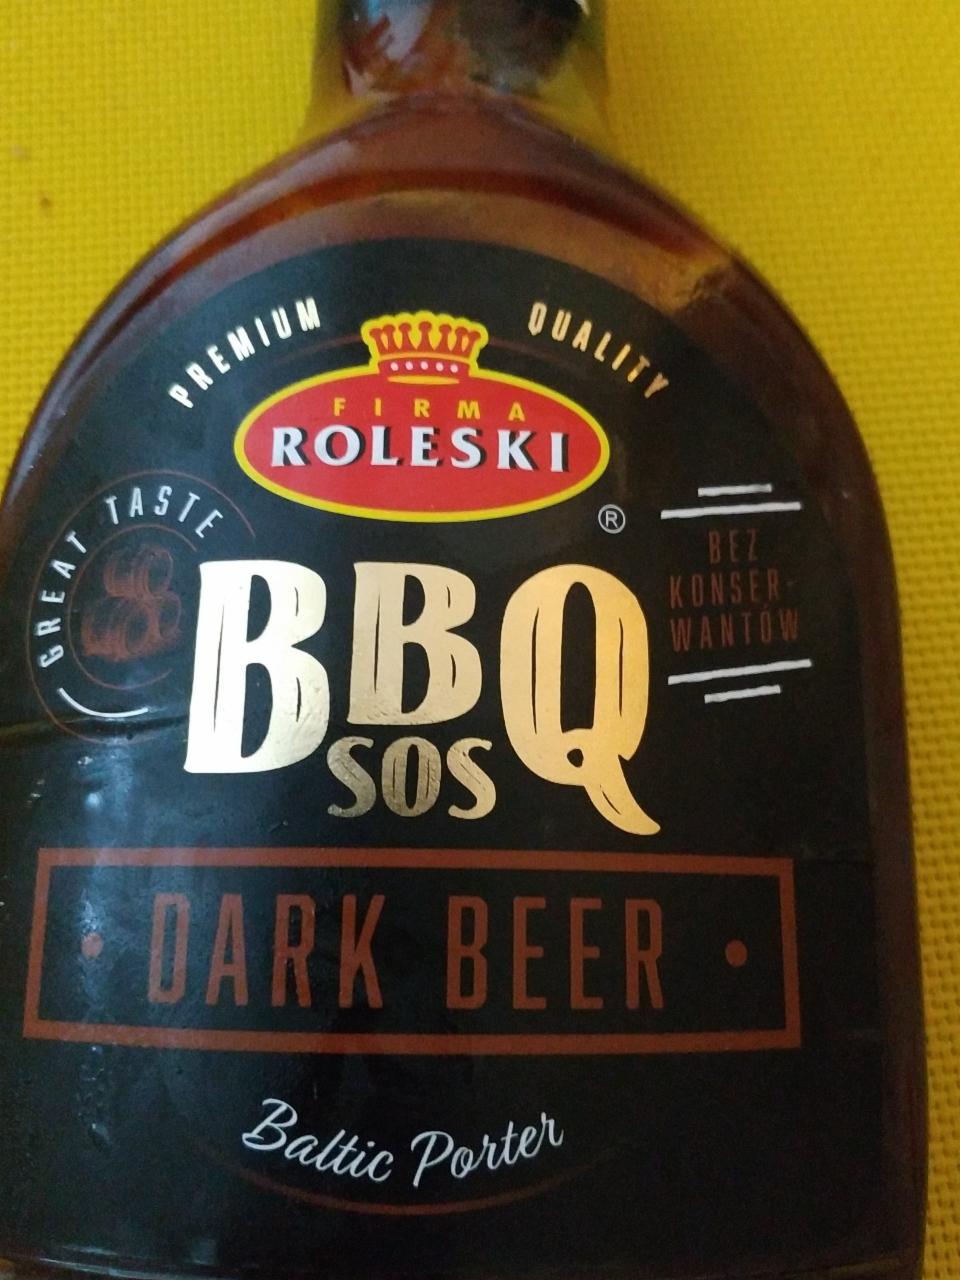 Fotografie - Sos BBQ Dark Beer Baltic Porter Firma Roleski